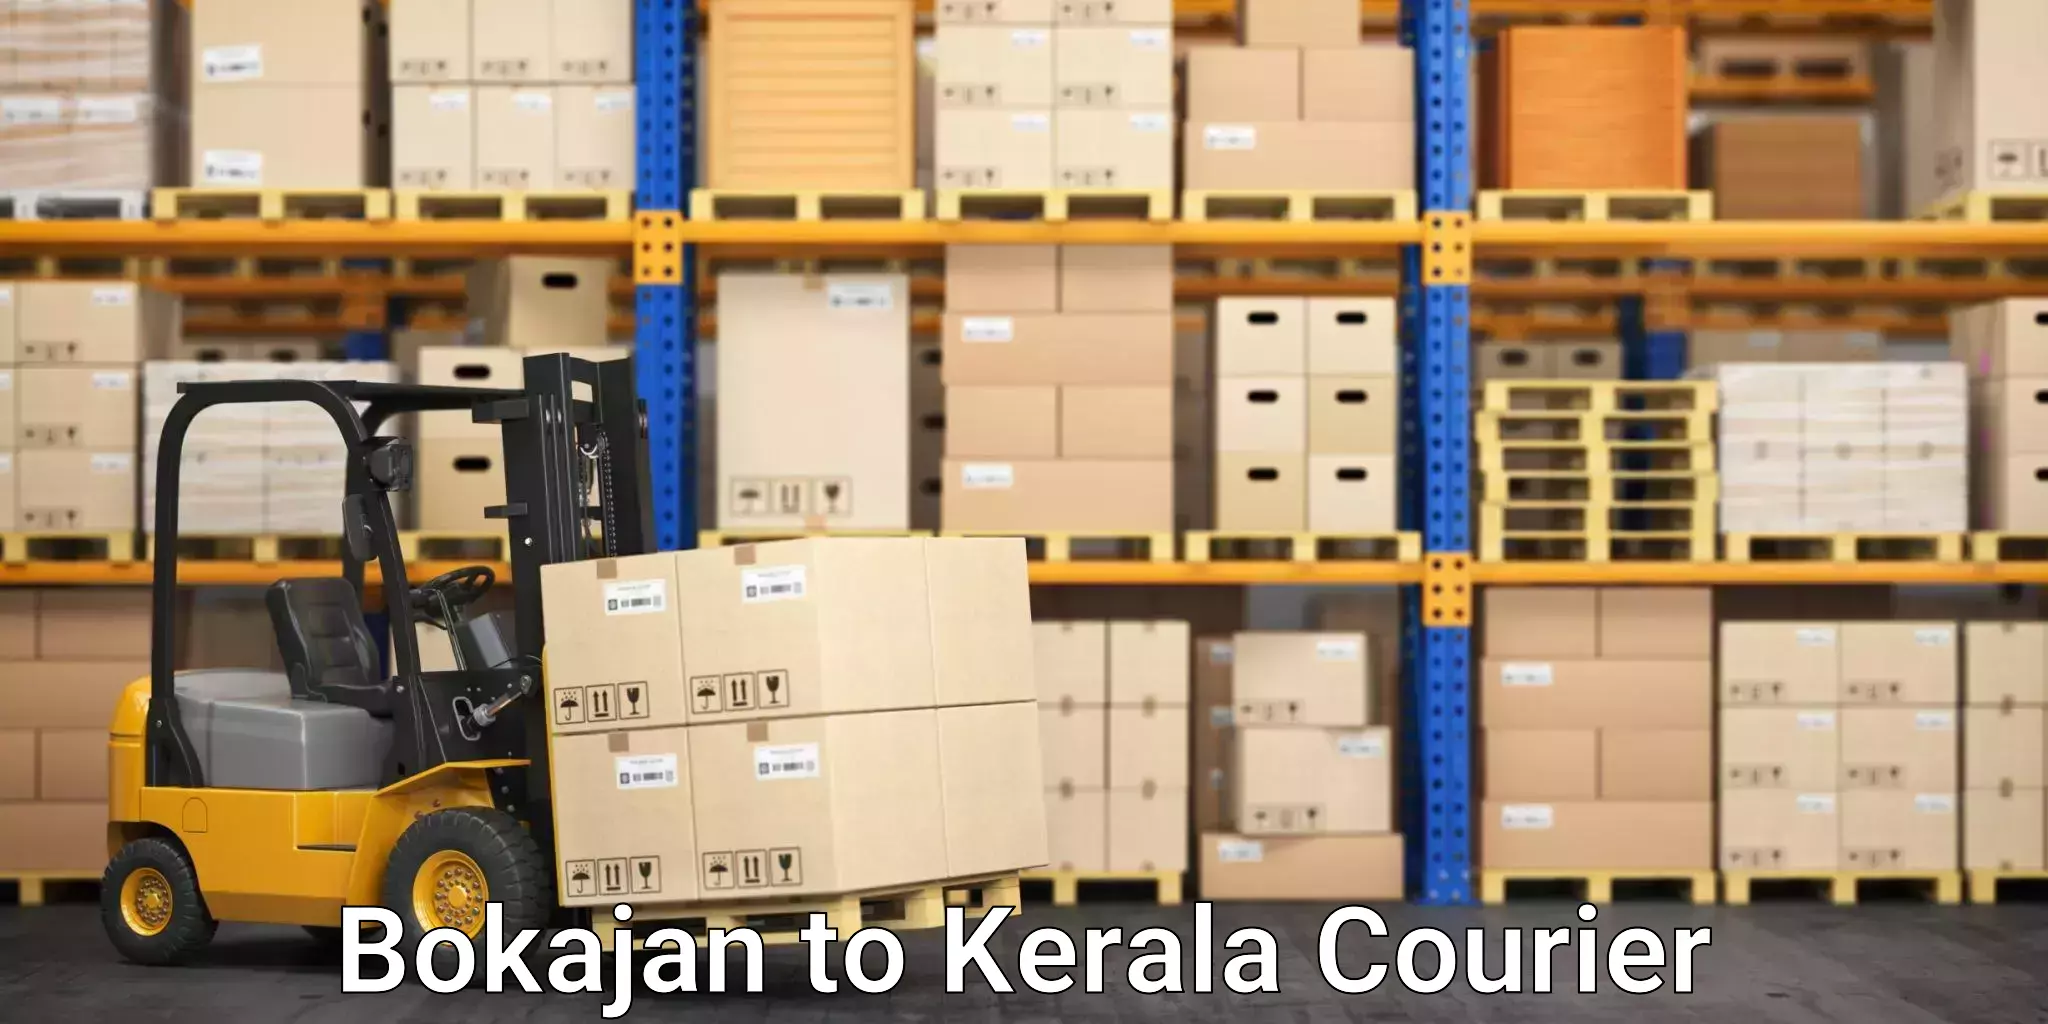 Express delivery solutions in Bokajan to Kochi